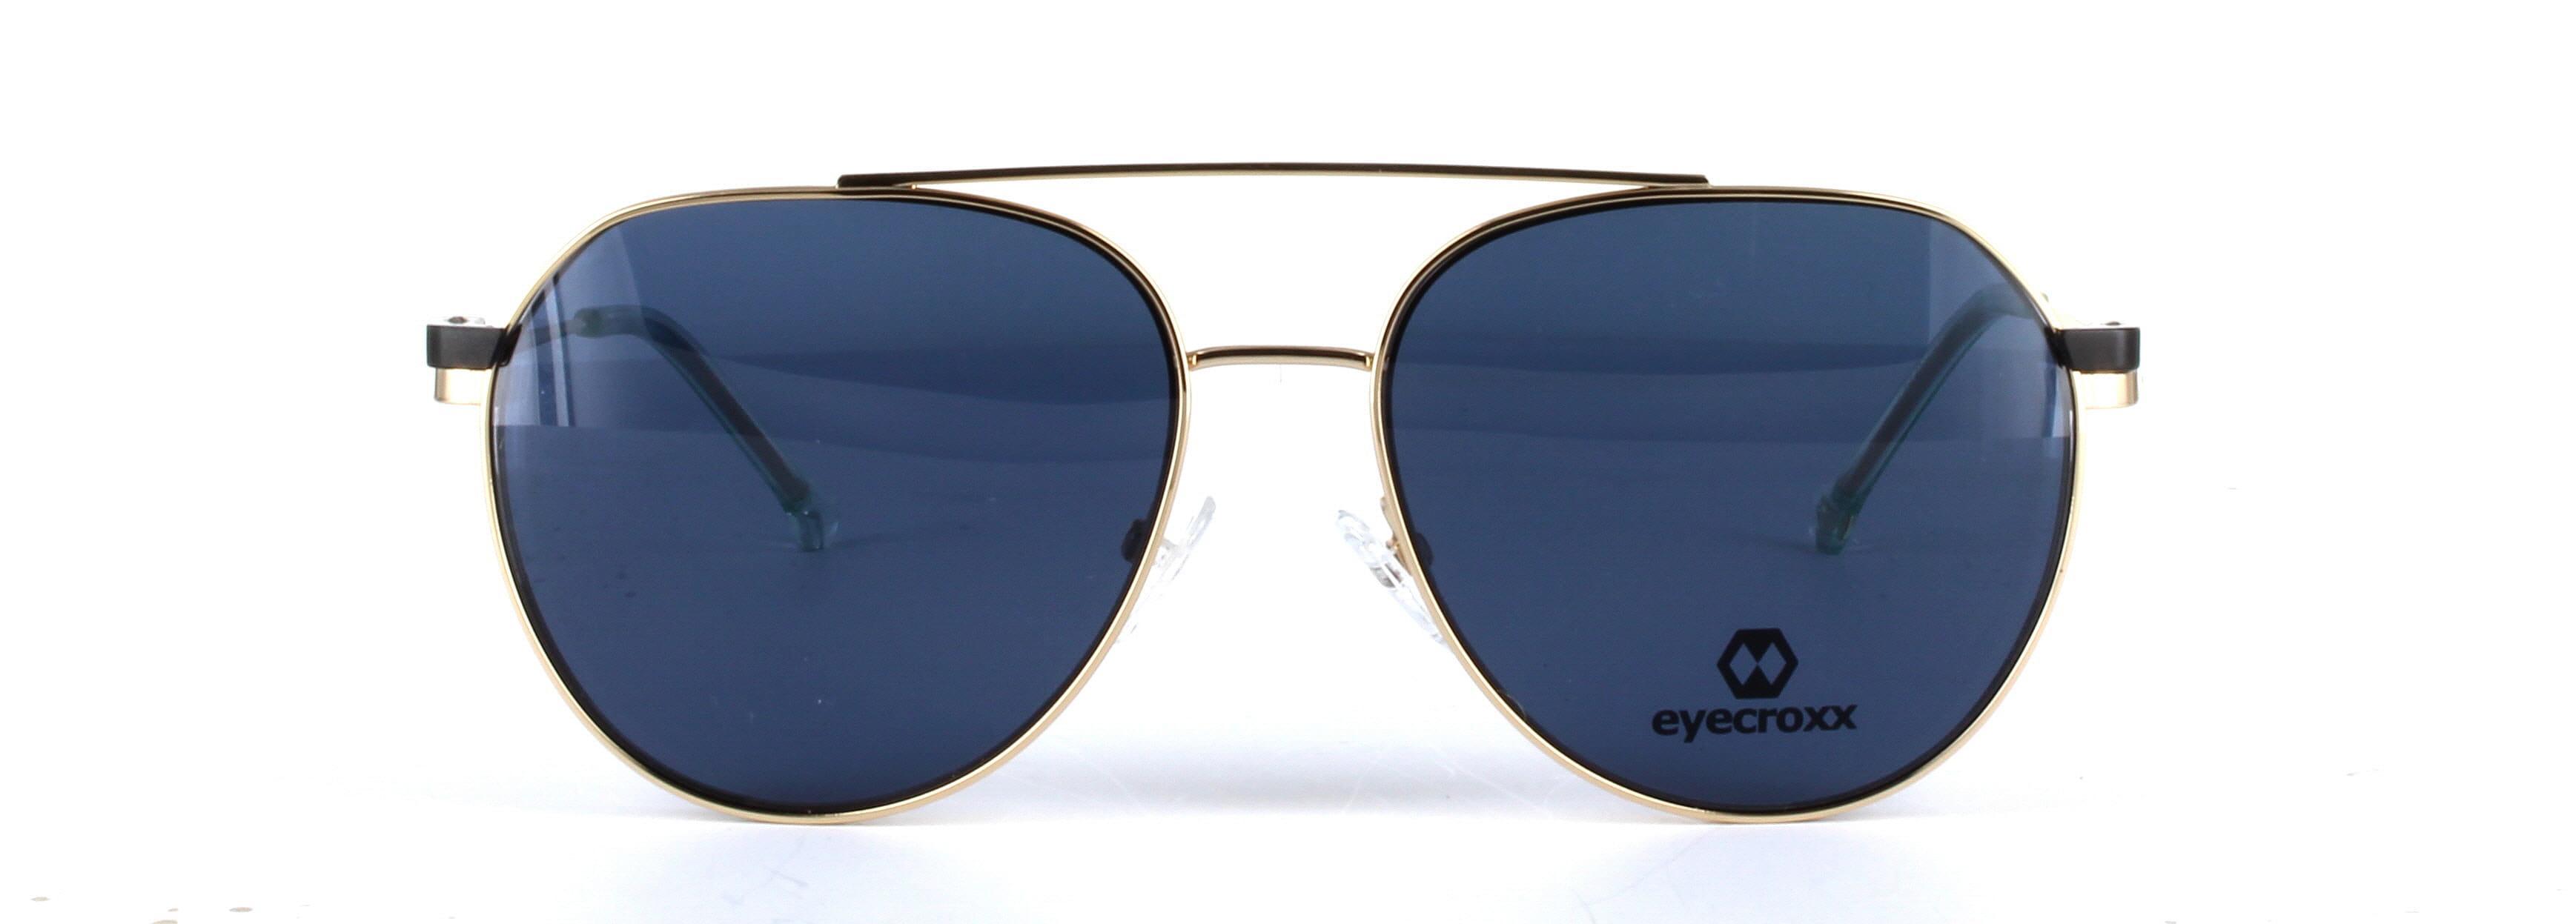 Eyecroxx 612 Gold and Black Full Rim Metal Glasses - Image View 2